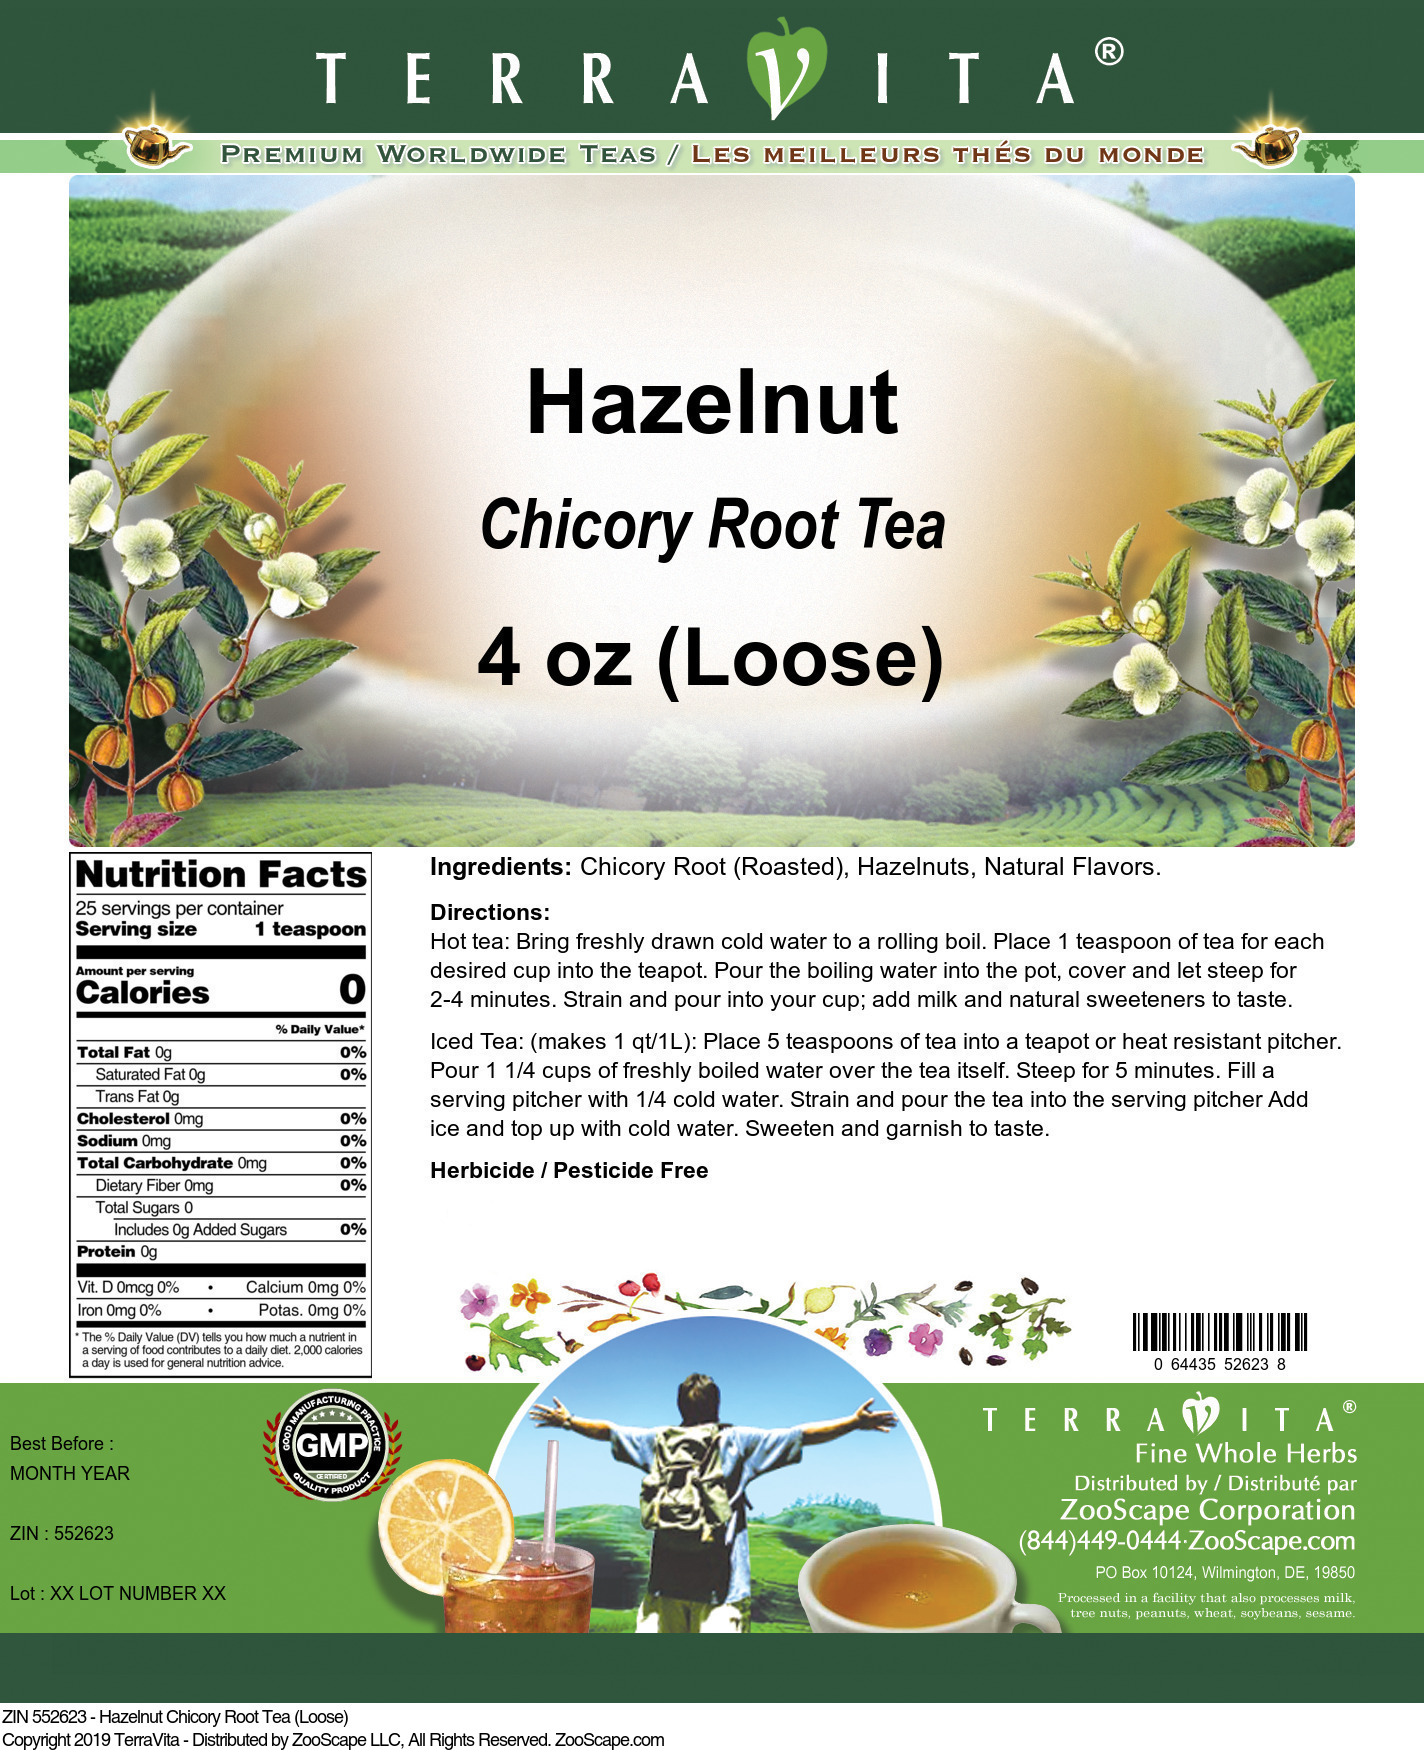 Hazelnut Chicory Root Tea (Loose) - Label